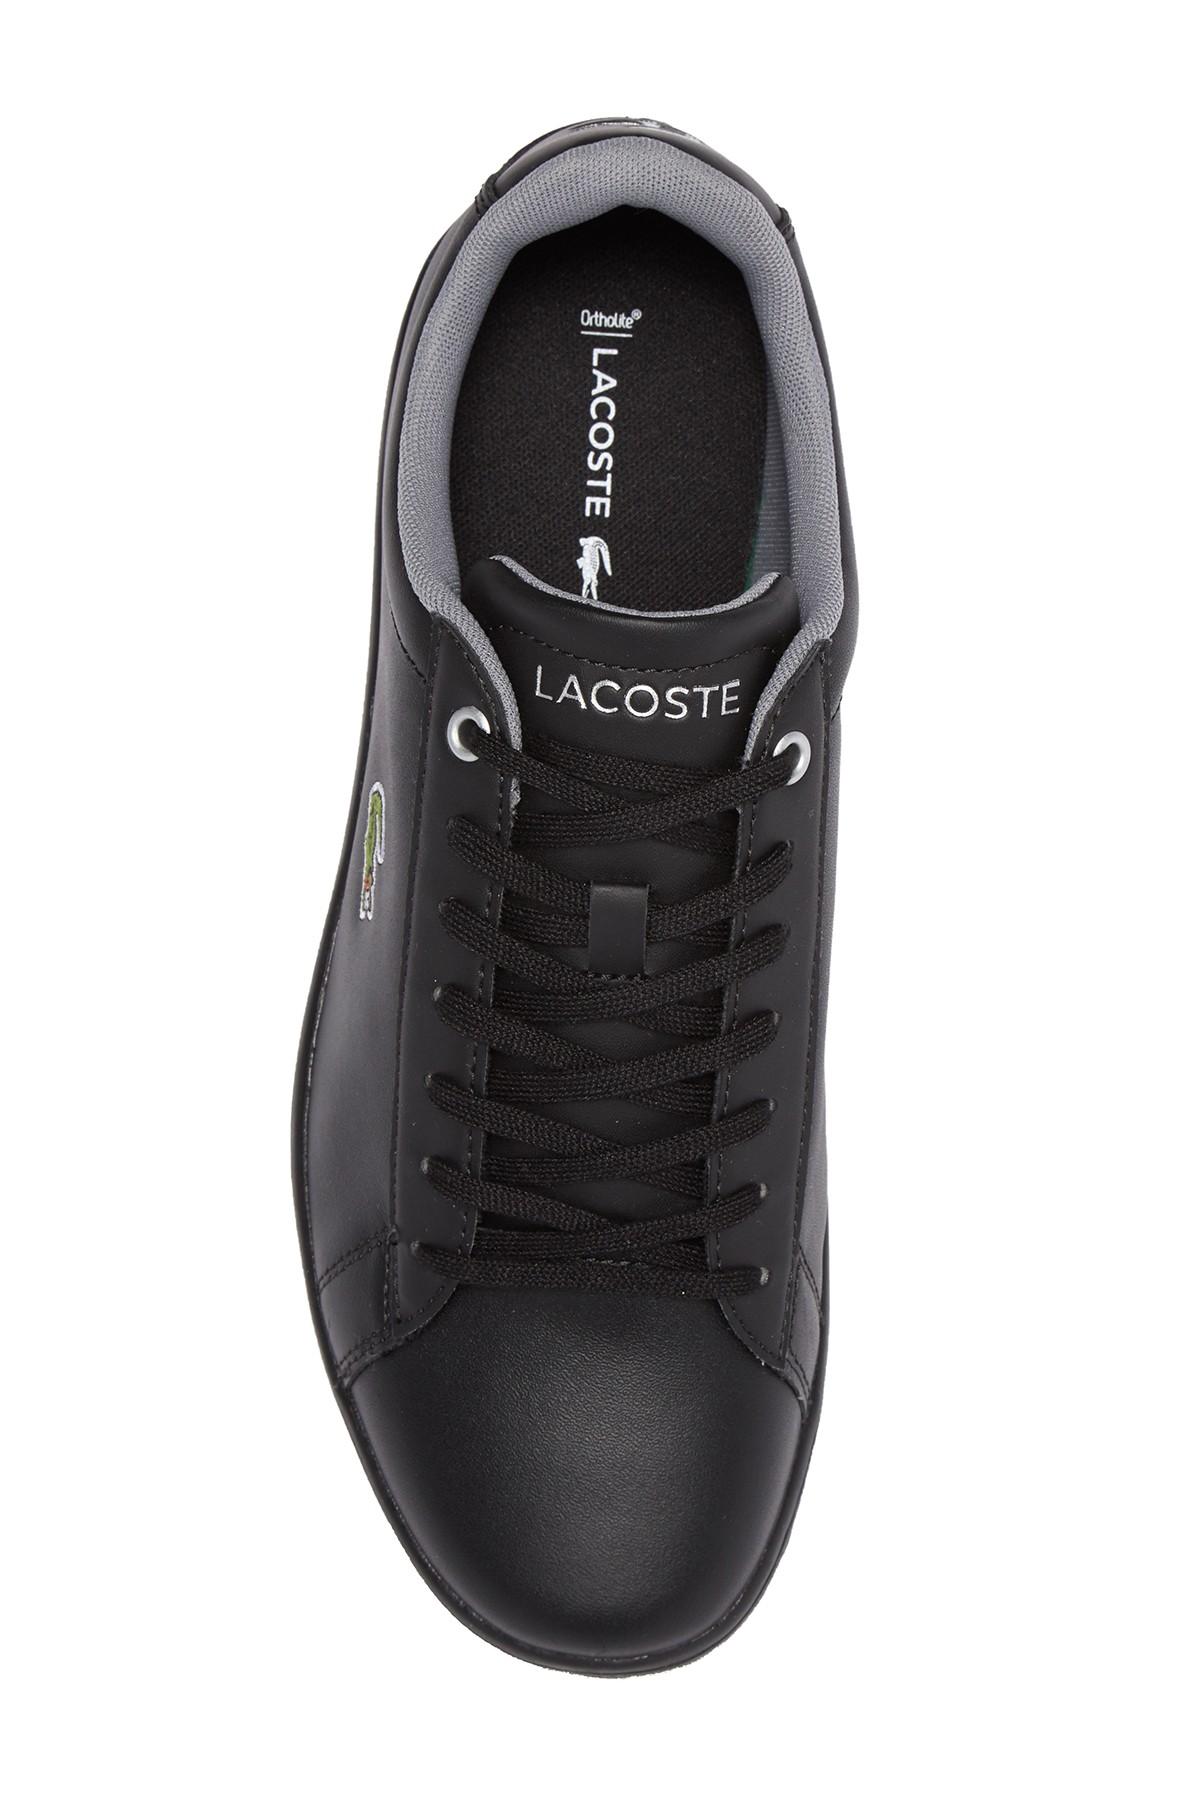 Lacoste Hydez Leather Sneaker in Black 